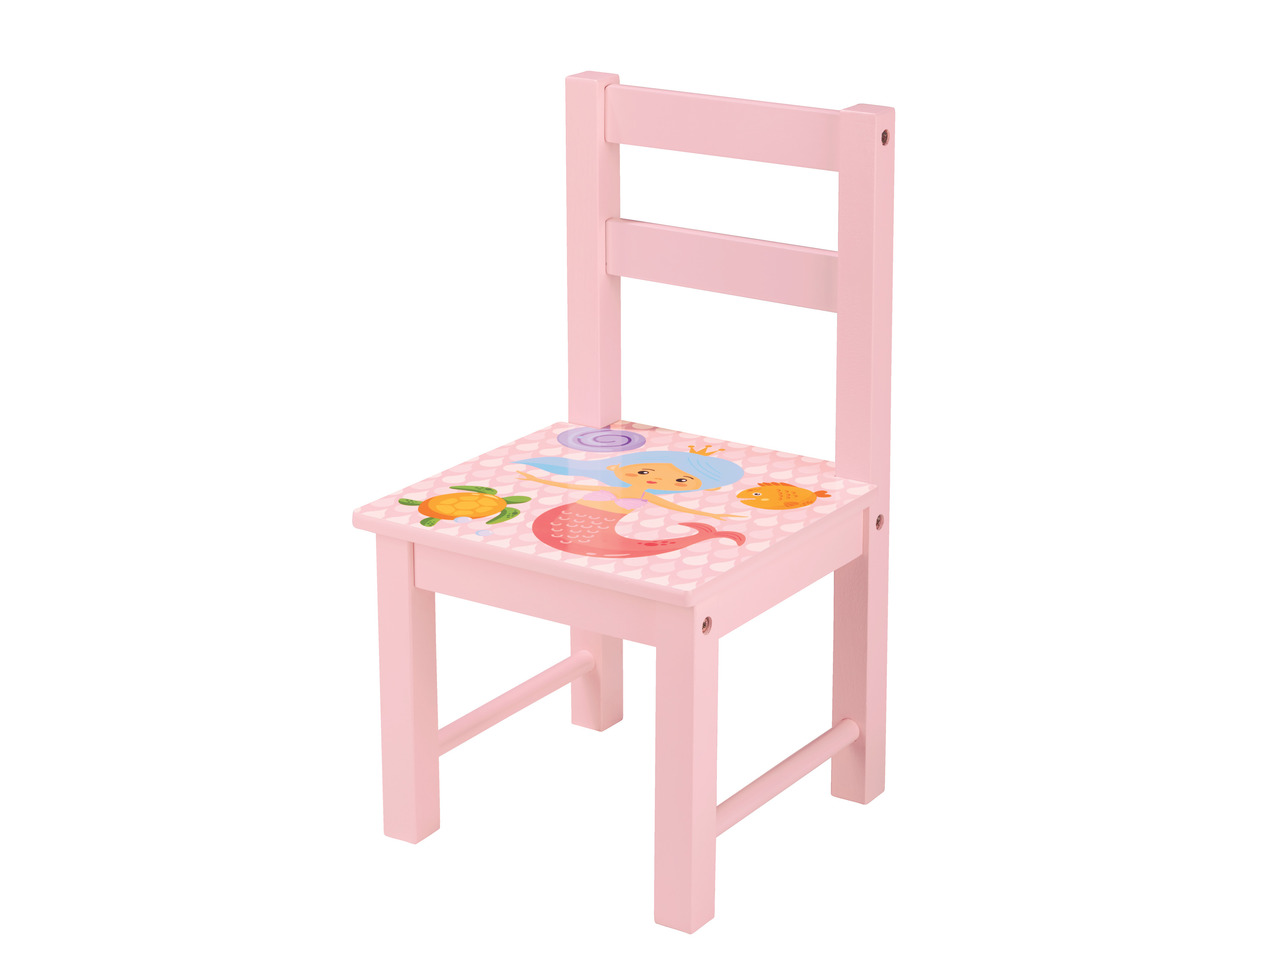 LIVARNO LIVING Kids' Table & Chairs